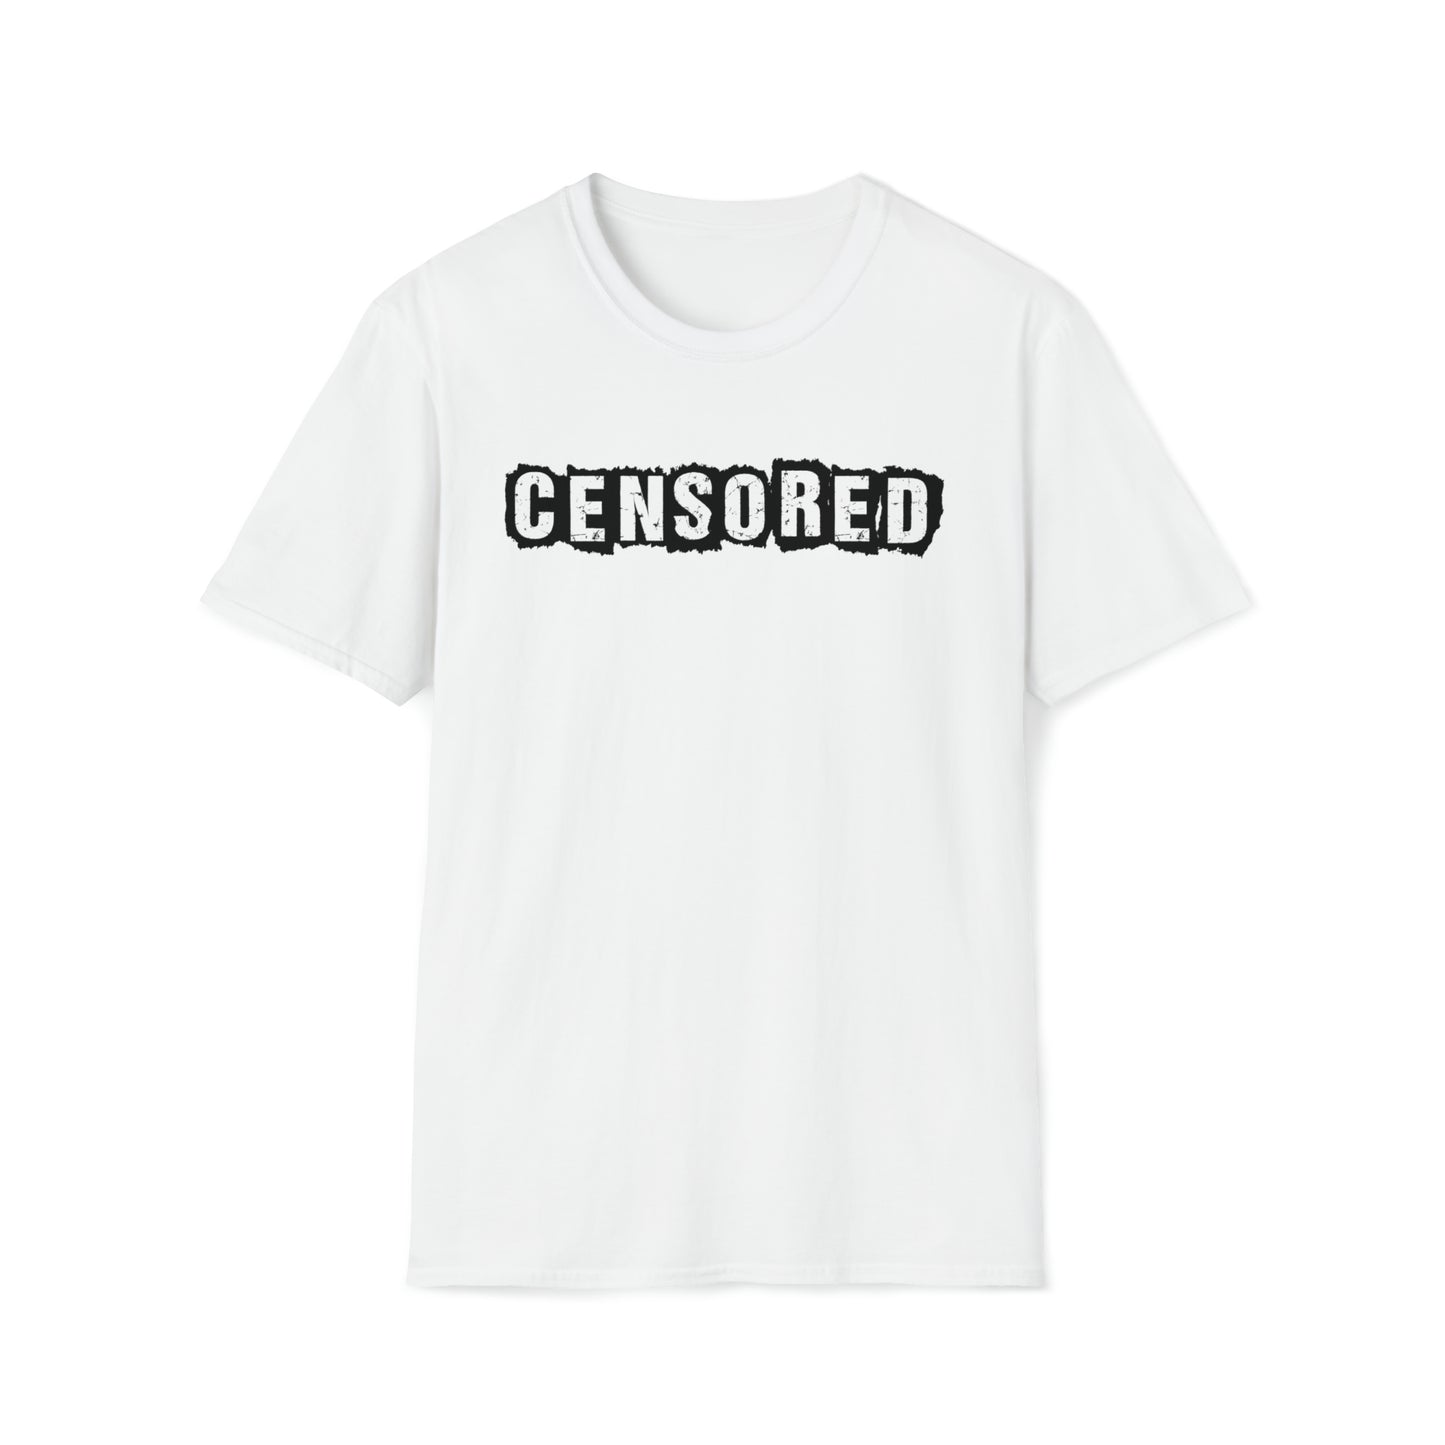 Censored - T-shirt